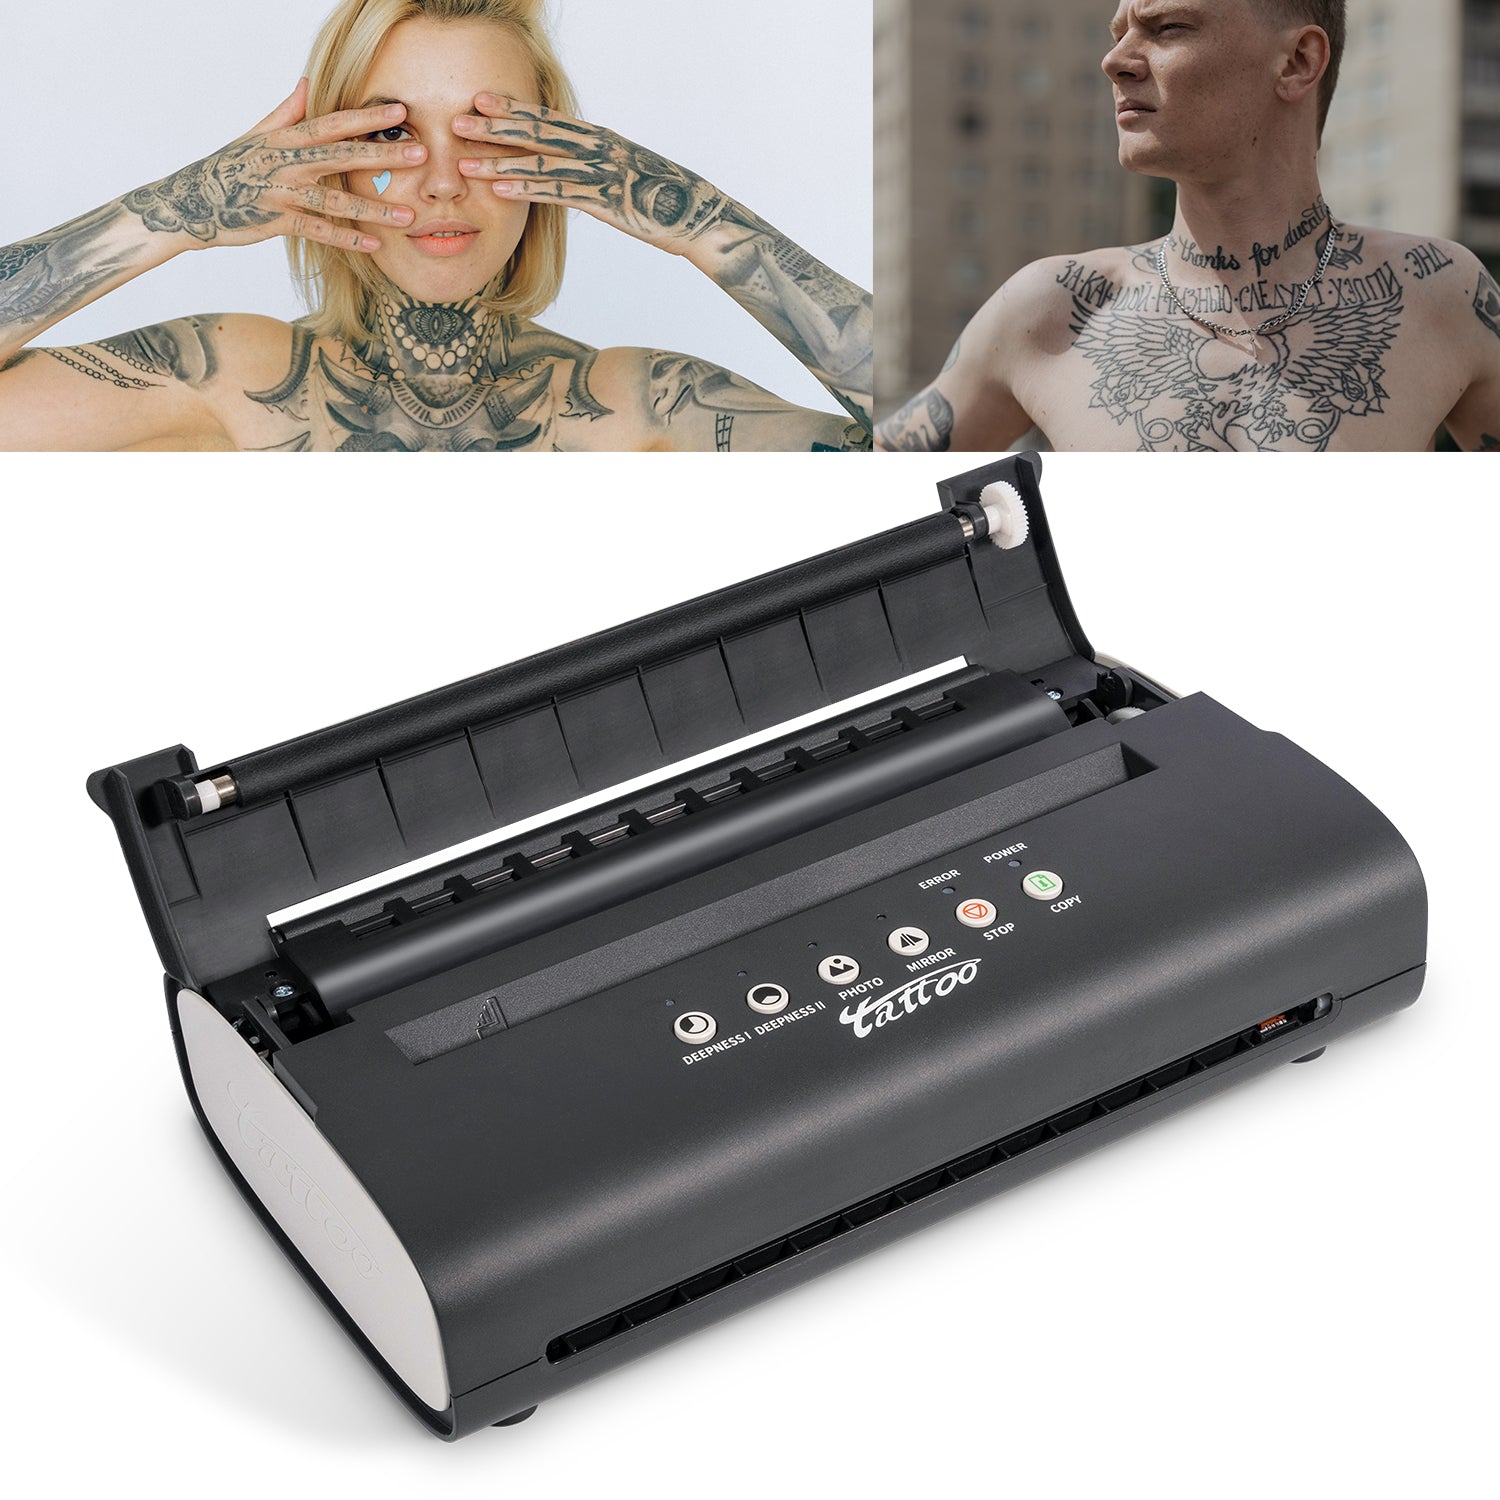 LifeBasis MT200 Tattoo Stencil Printer Thermal Tattoo Stencil Transfer  Machine Tattoo Printer Upgraded Version With 20PCS Free Tattoo Transfer  Paper